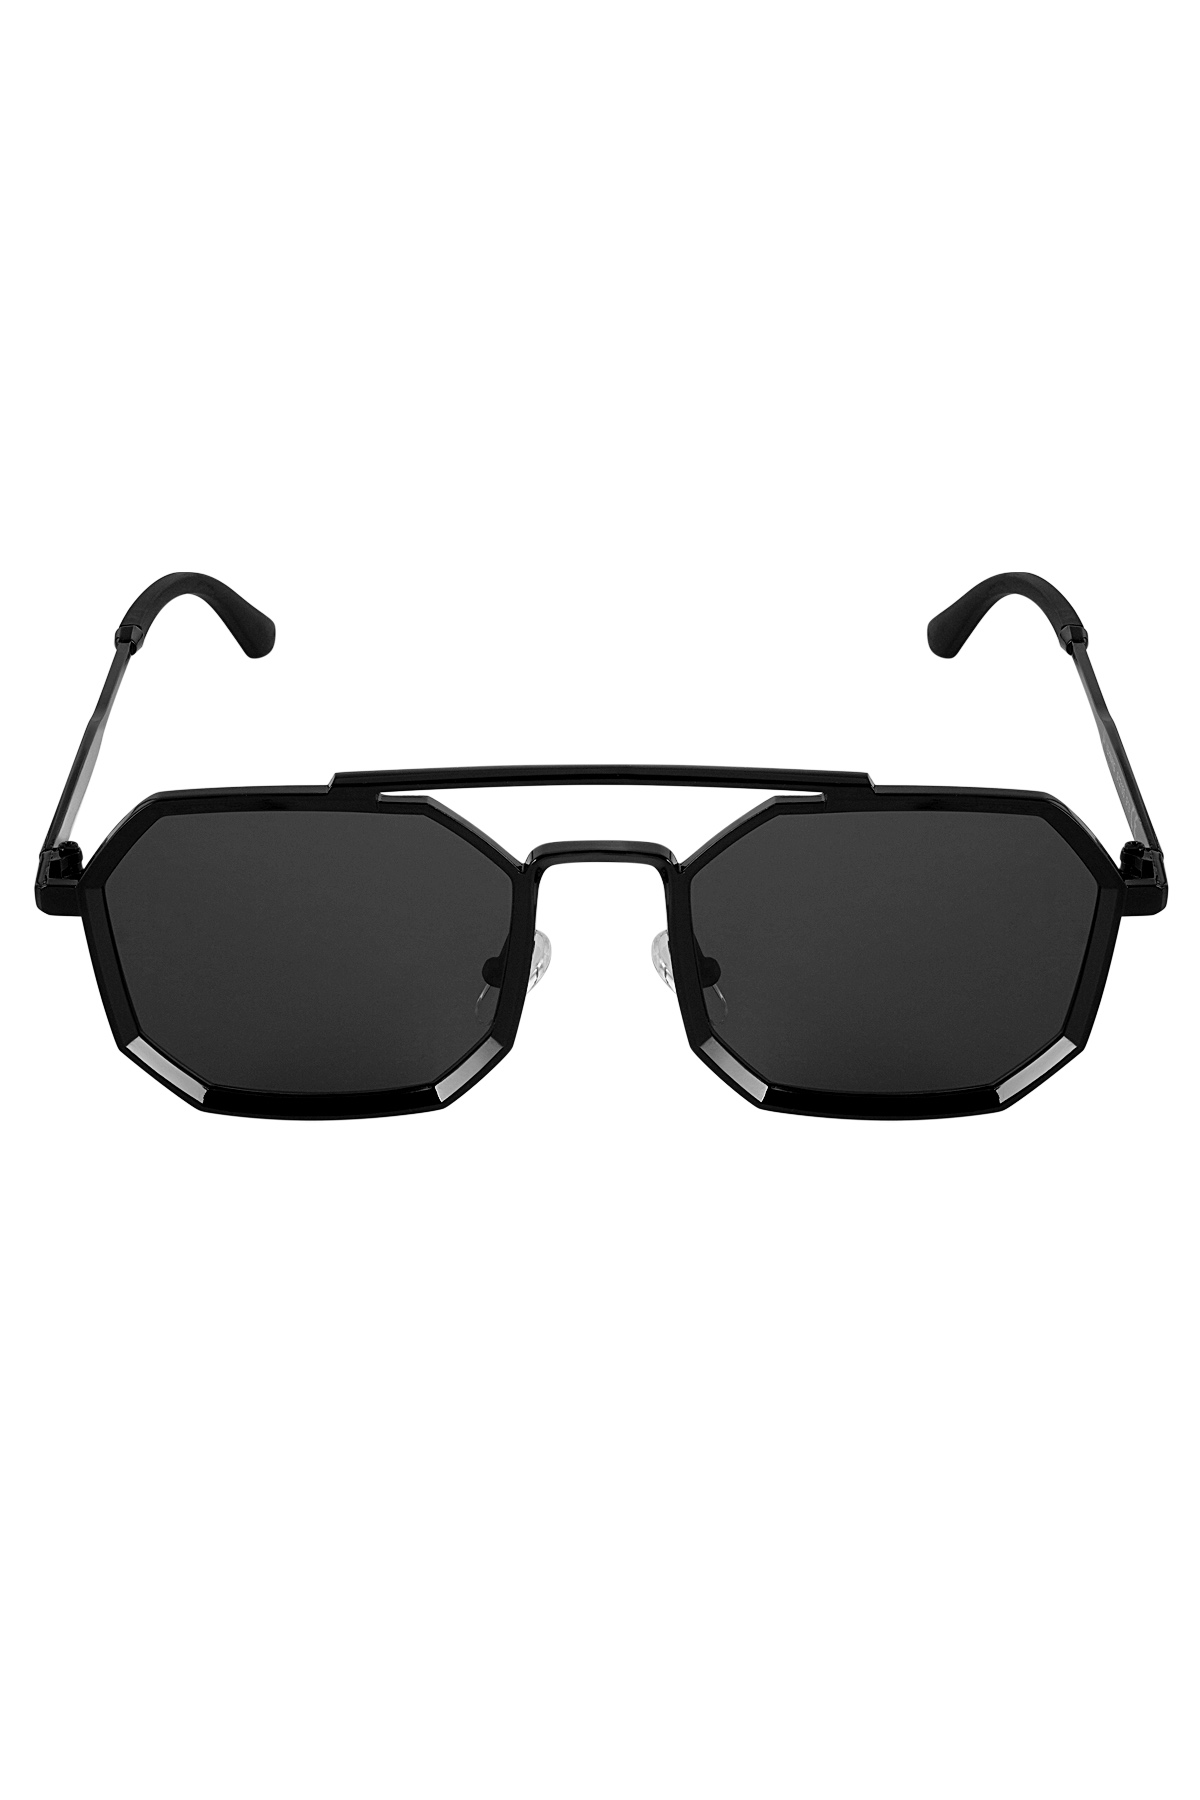 Sunglasses LuminLens - black gold Picture4